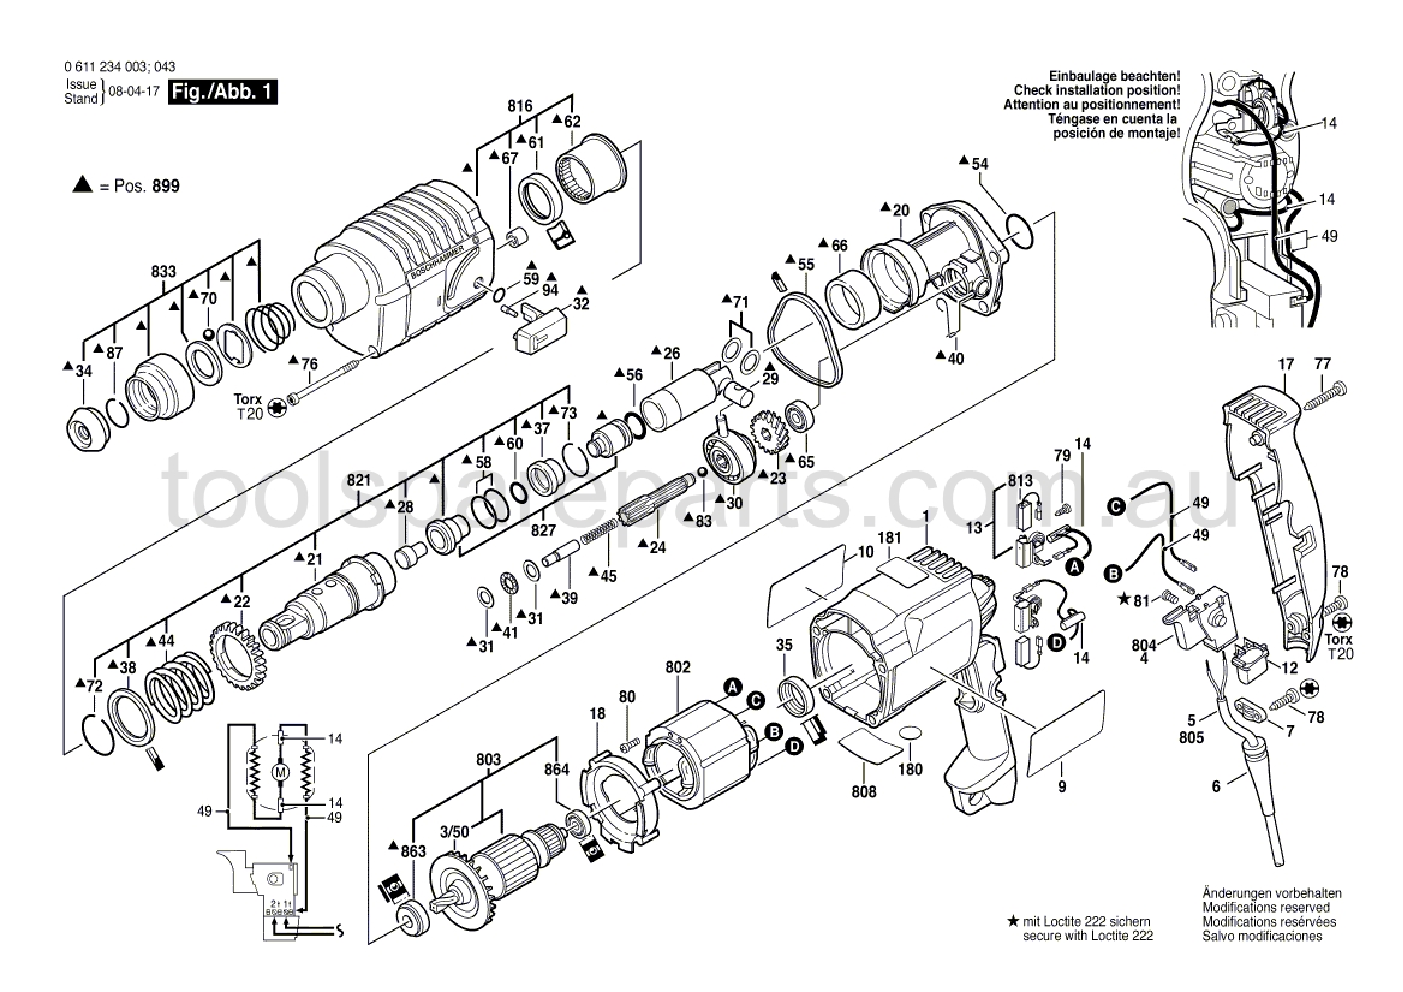 Bosch GBH 2-20 S 0611234037  Diagram 1